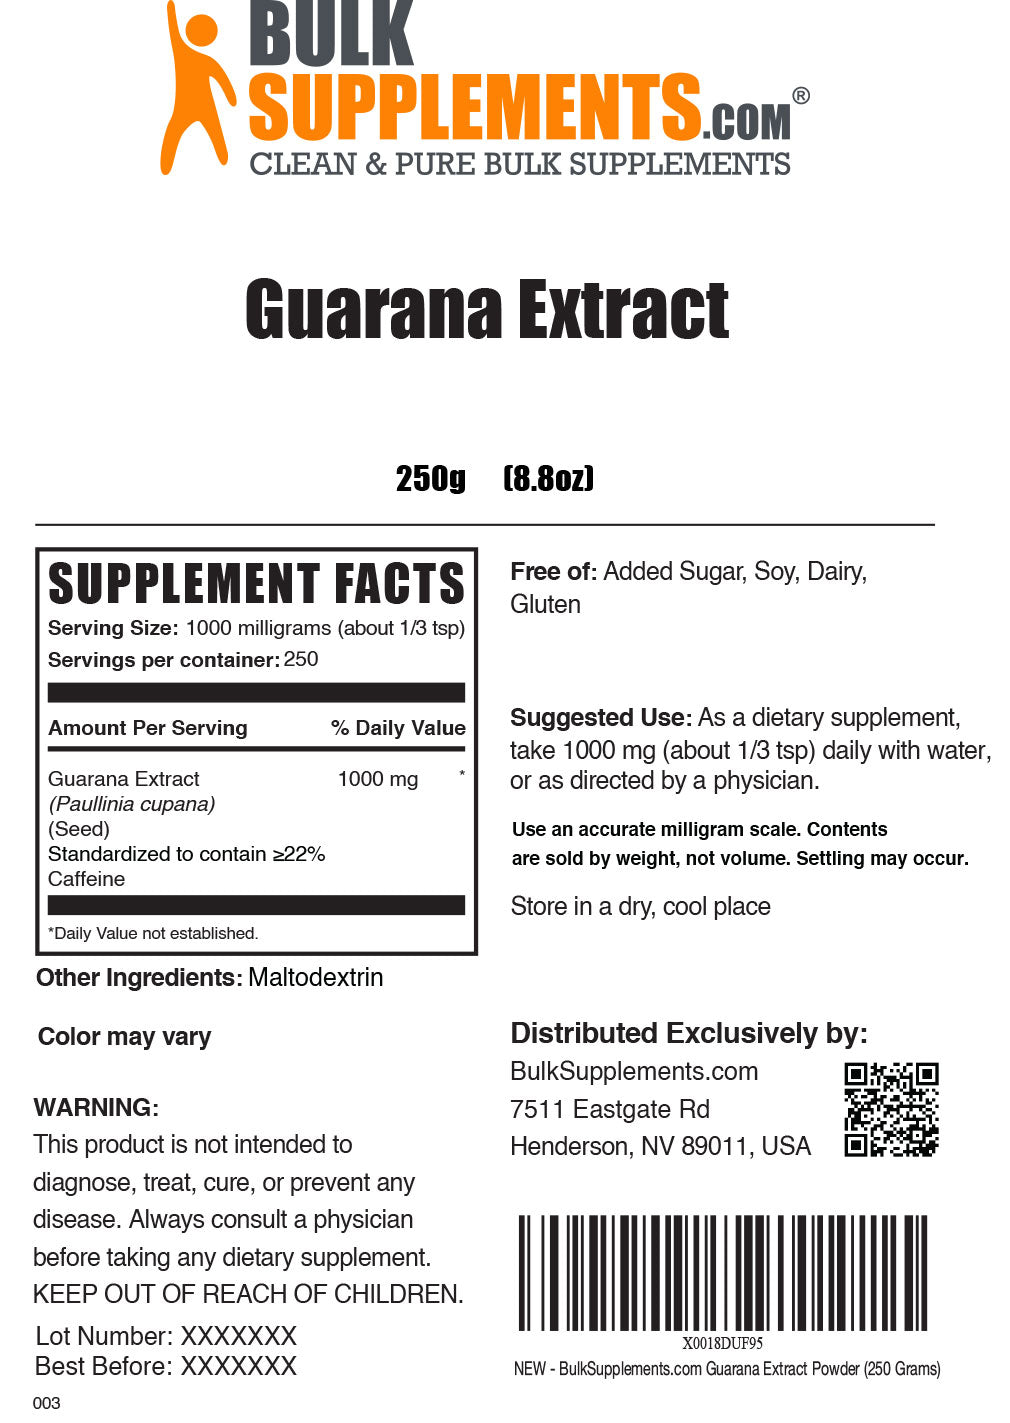 Guarana extract powder label 250g